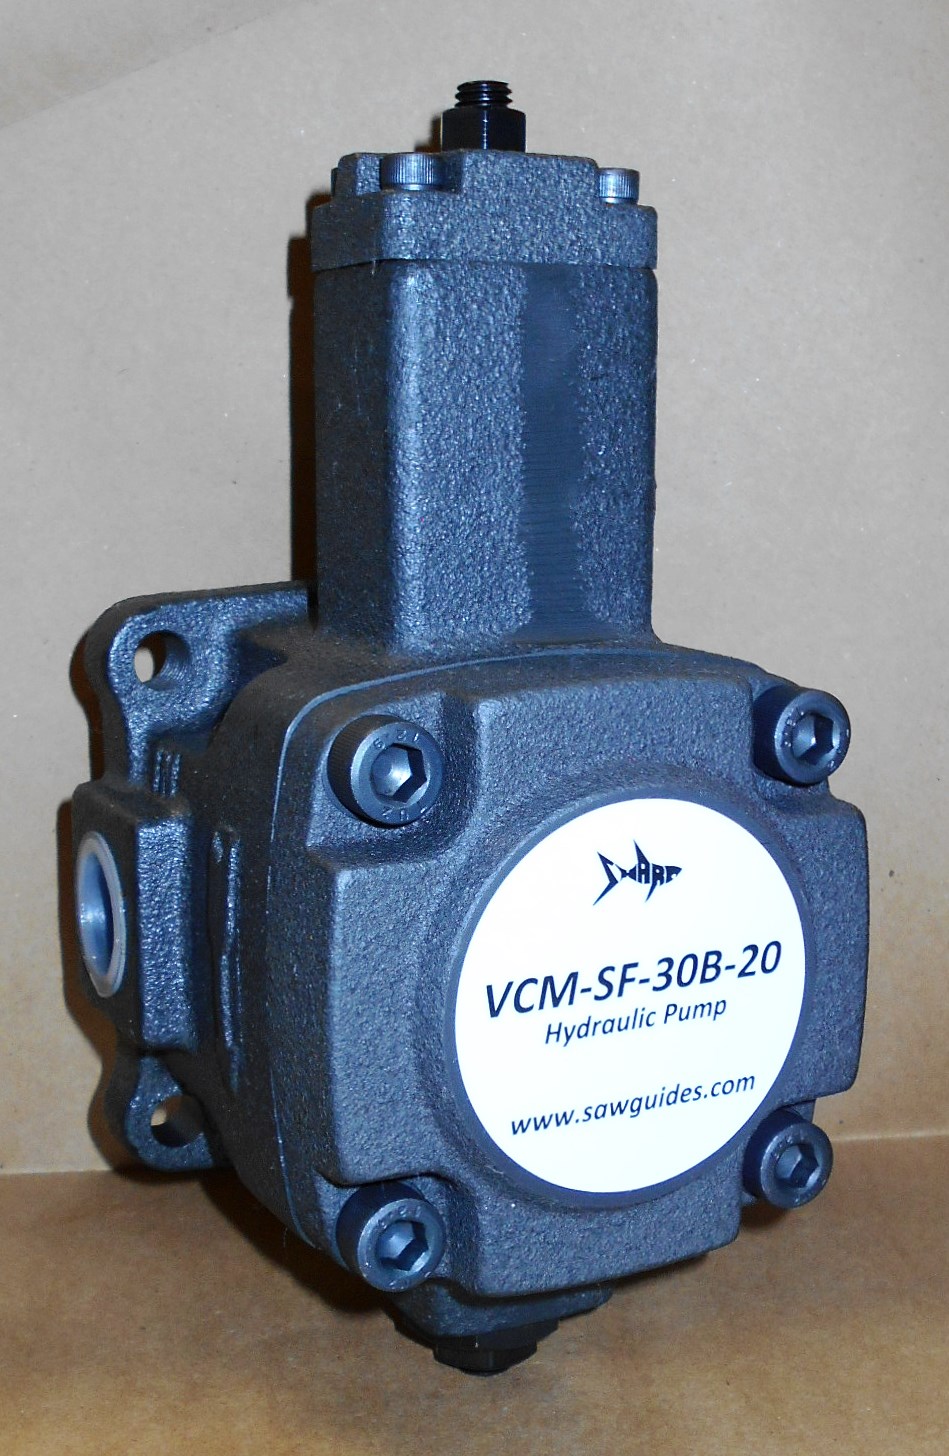 VCM-SF-30B-20